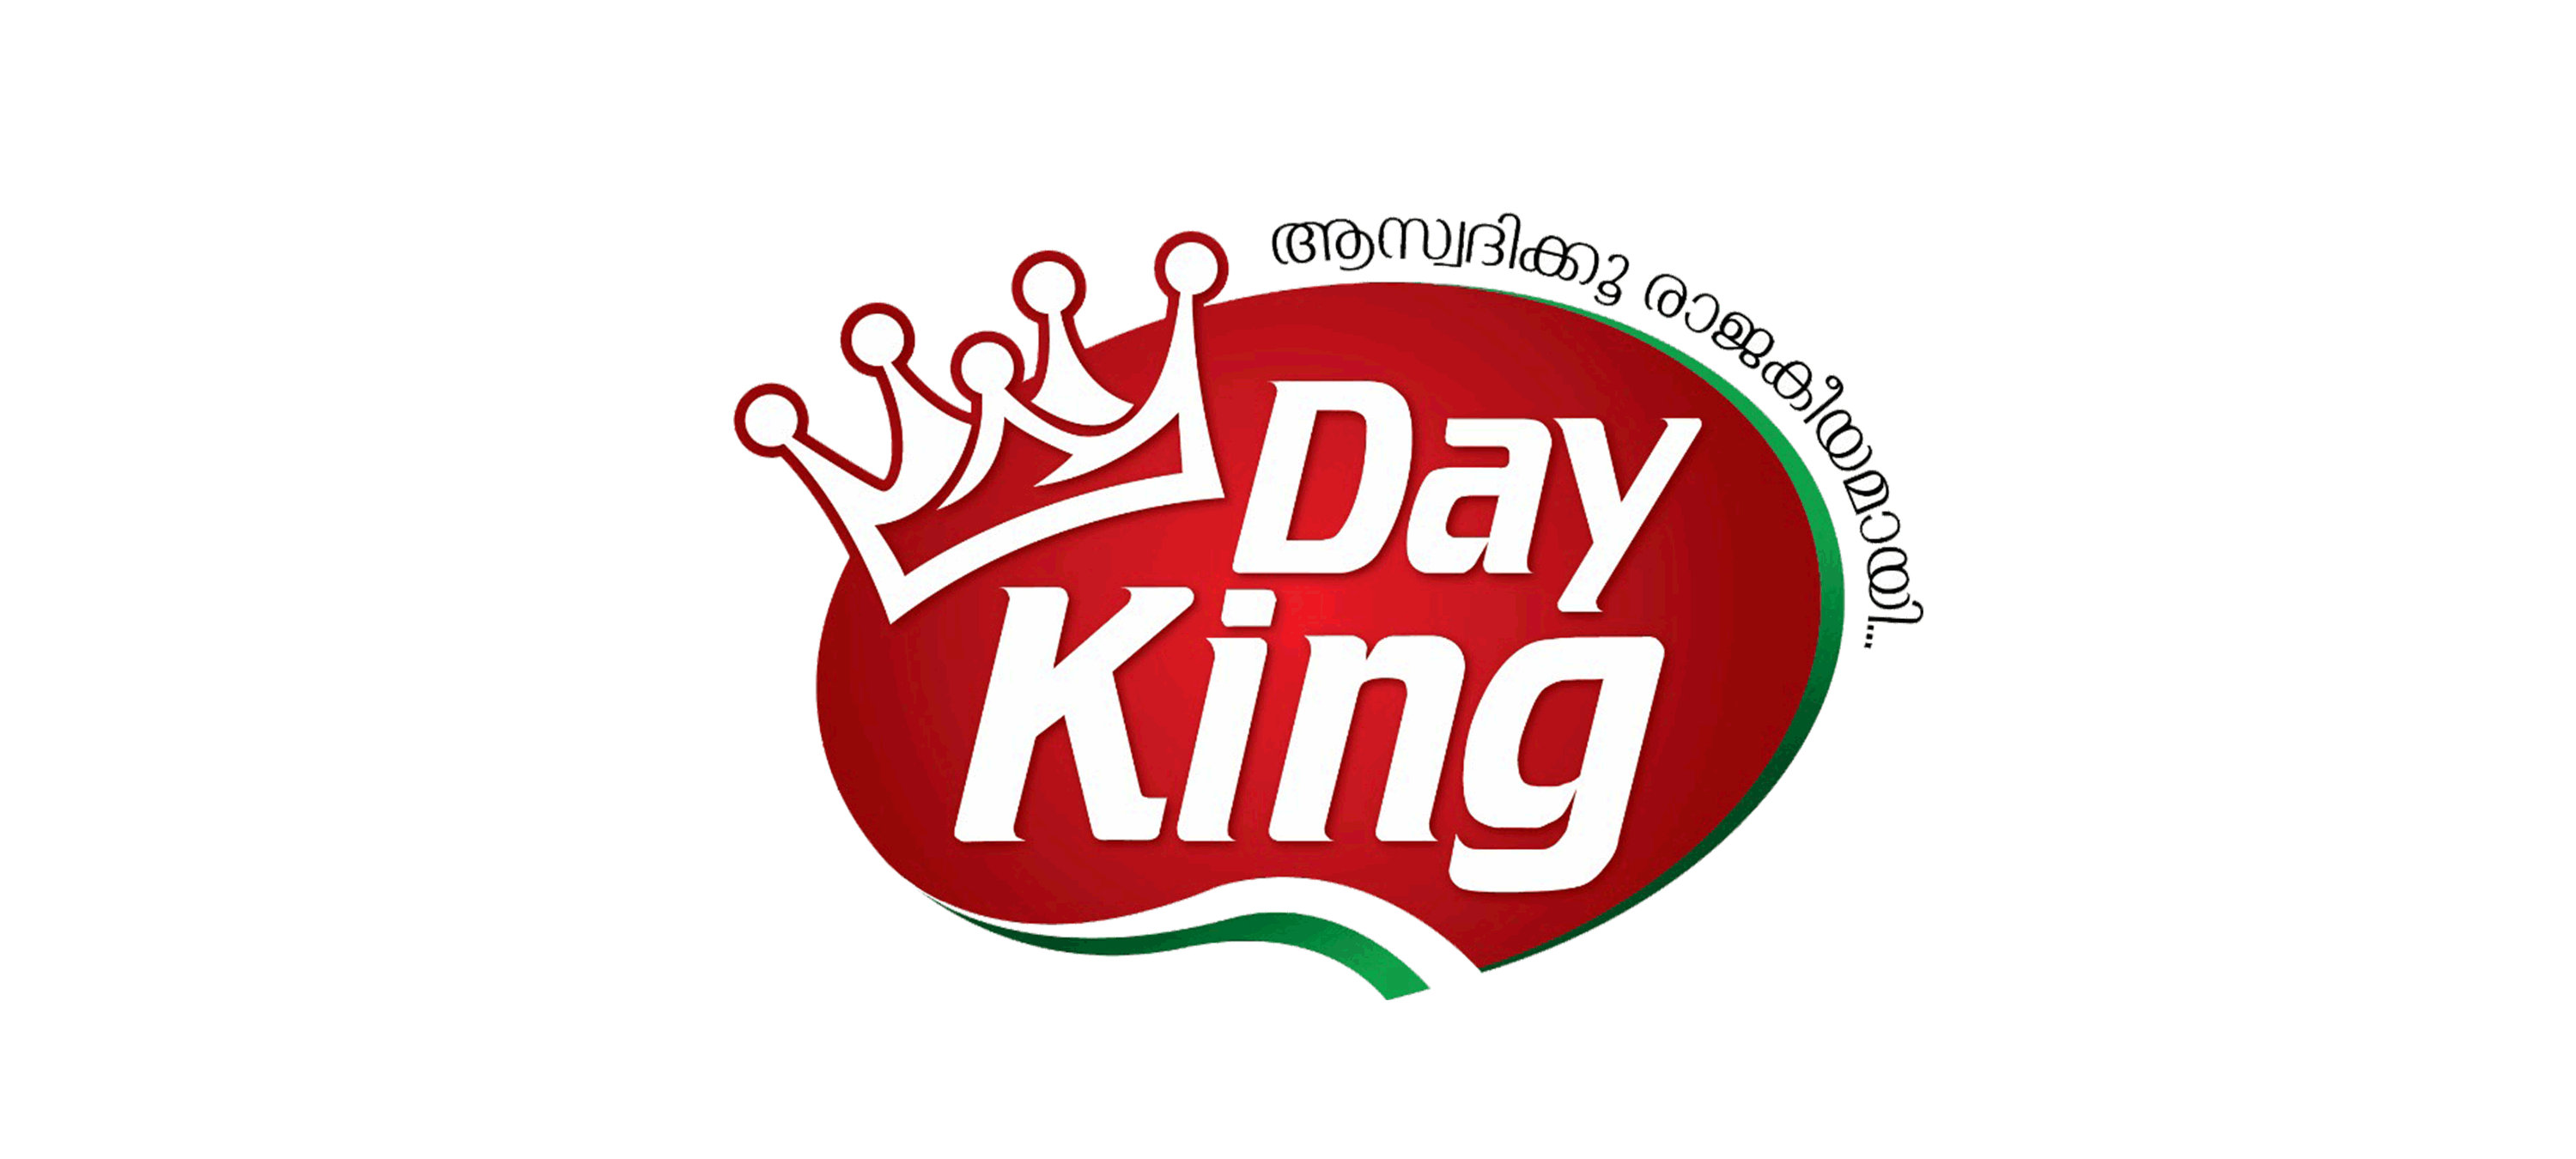 Day King